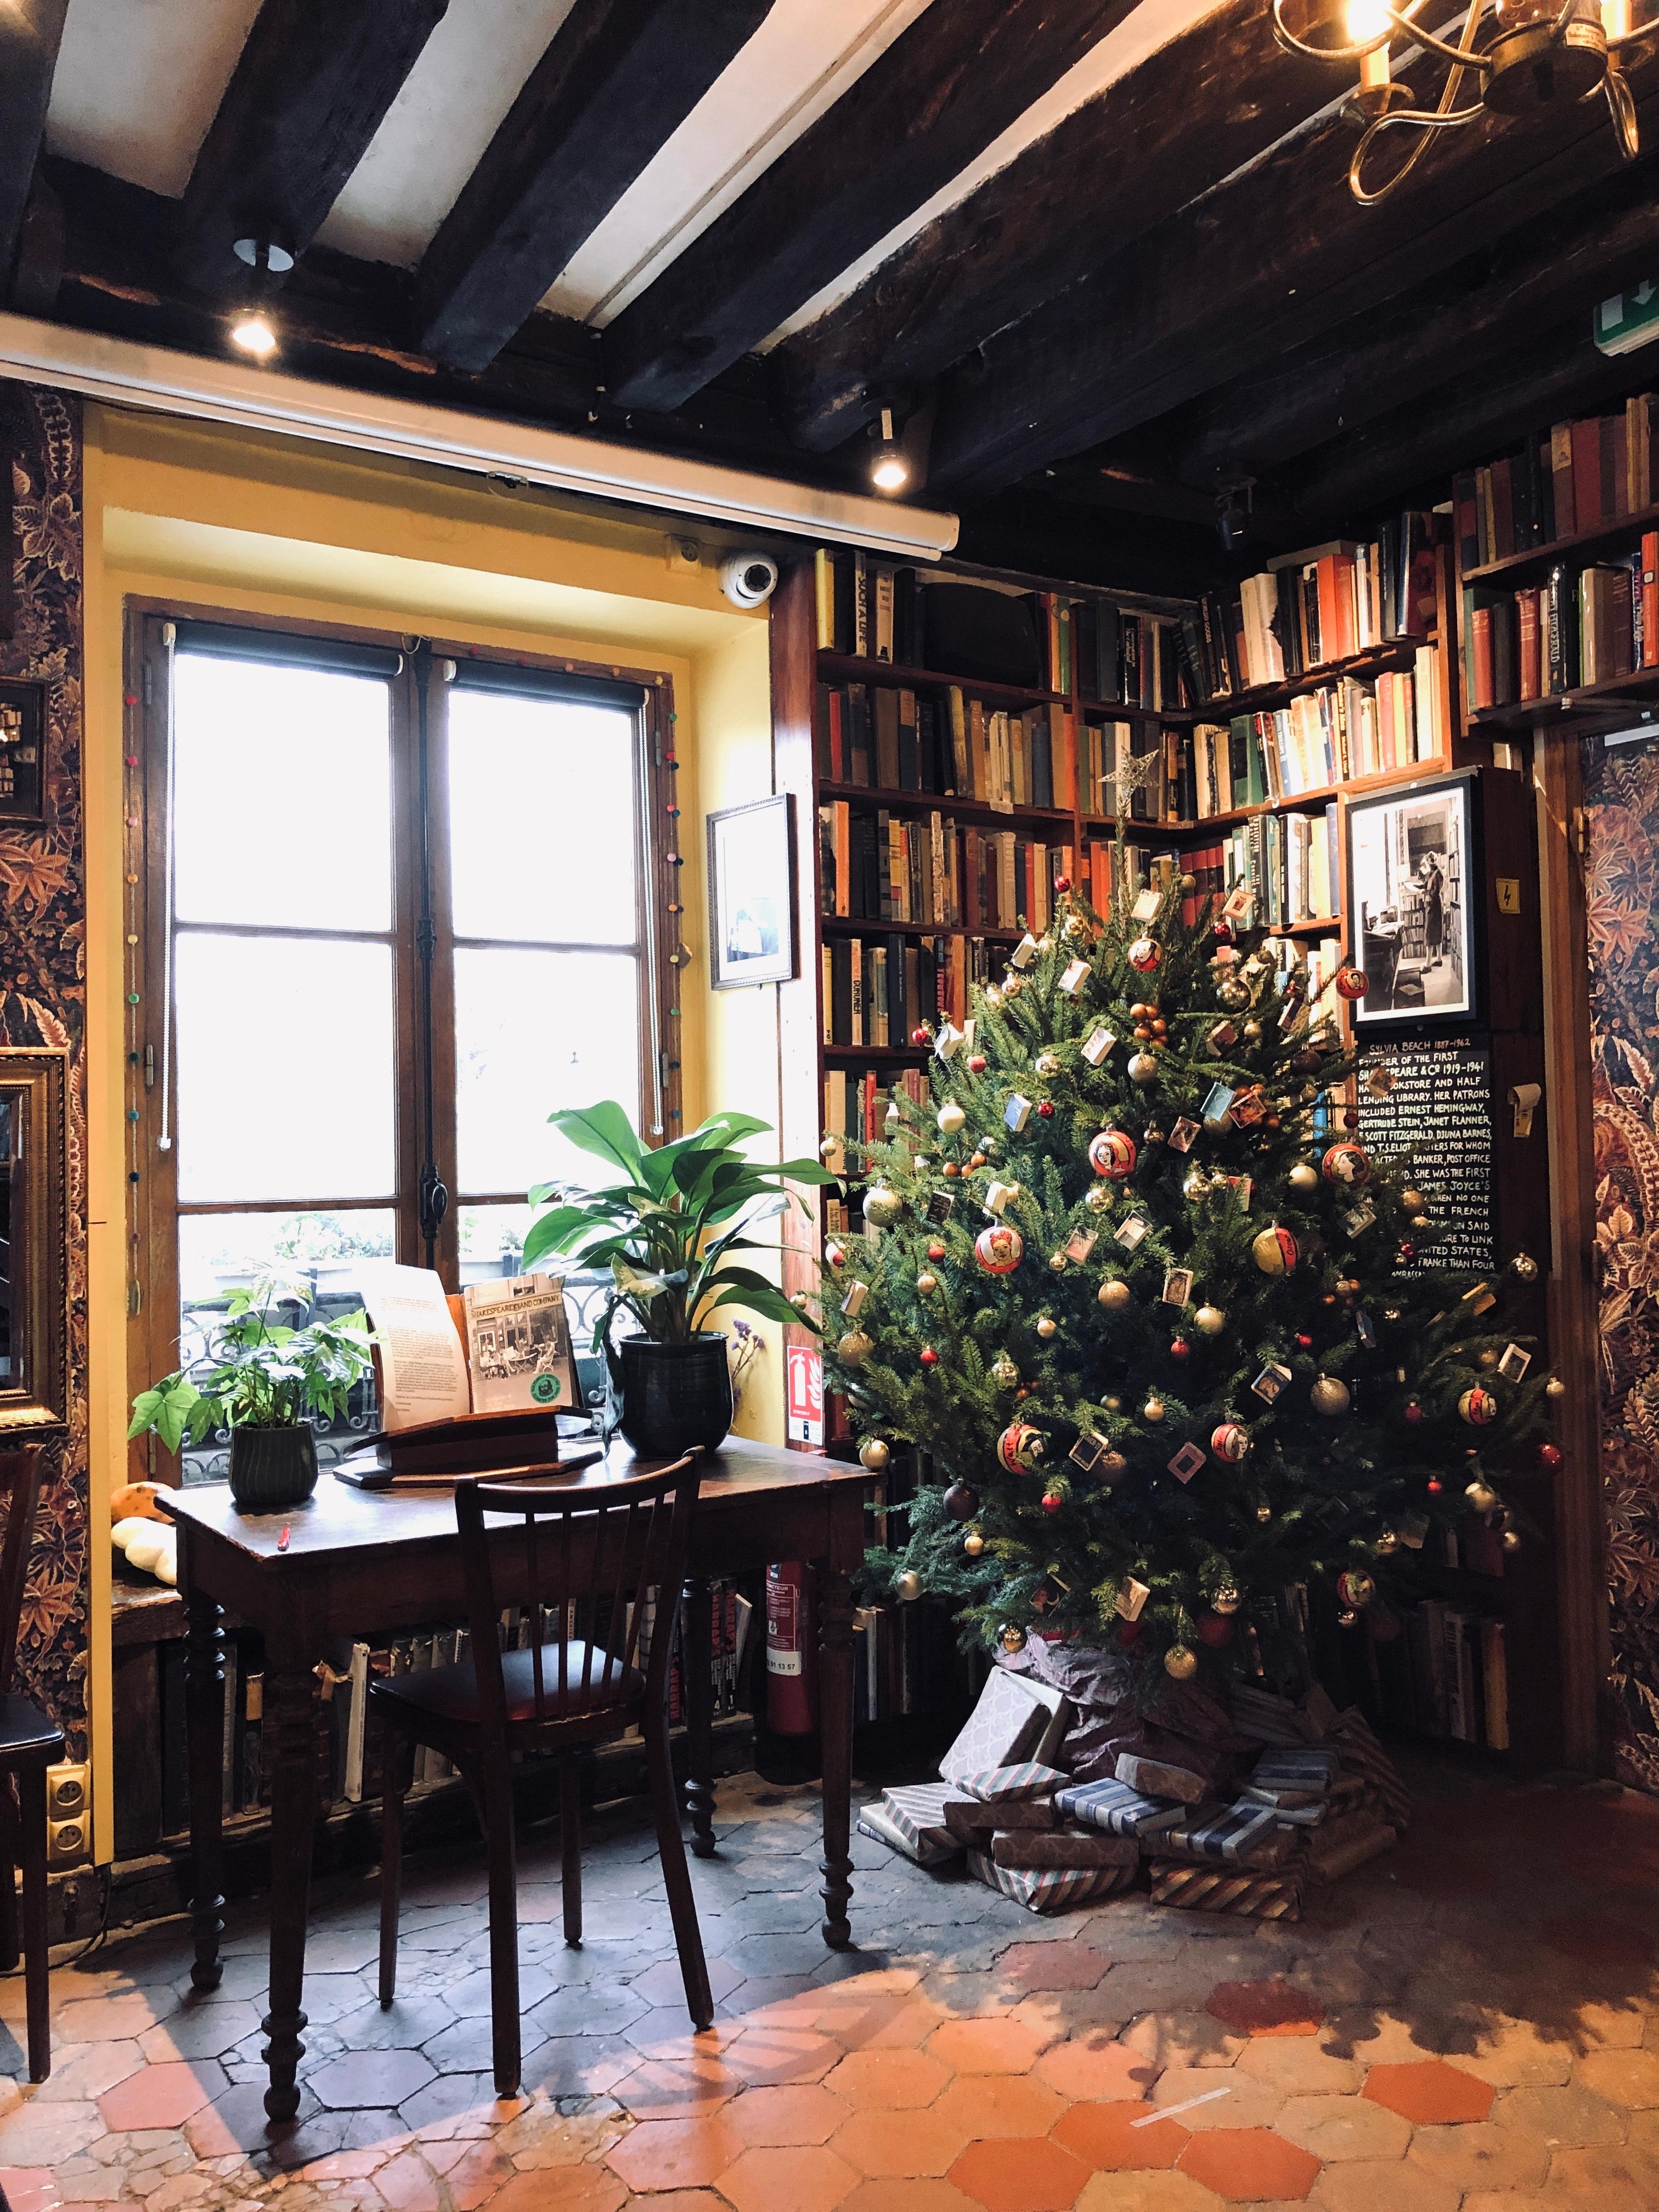 It’s beginning to look like Christmas 🎄 
#interiorinspiration #foundinparis #bookstore